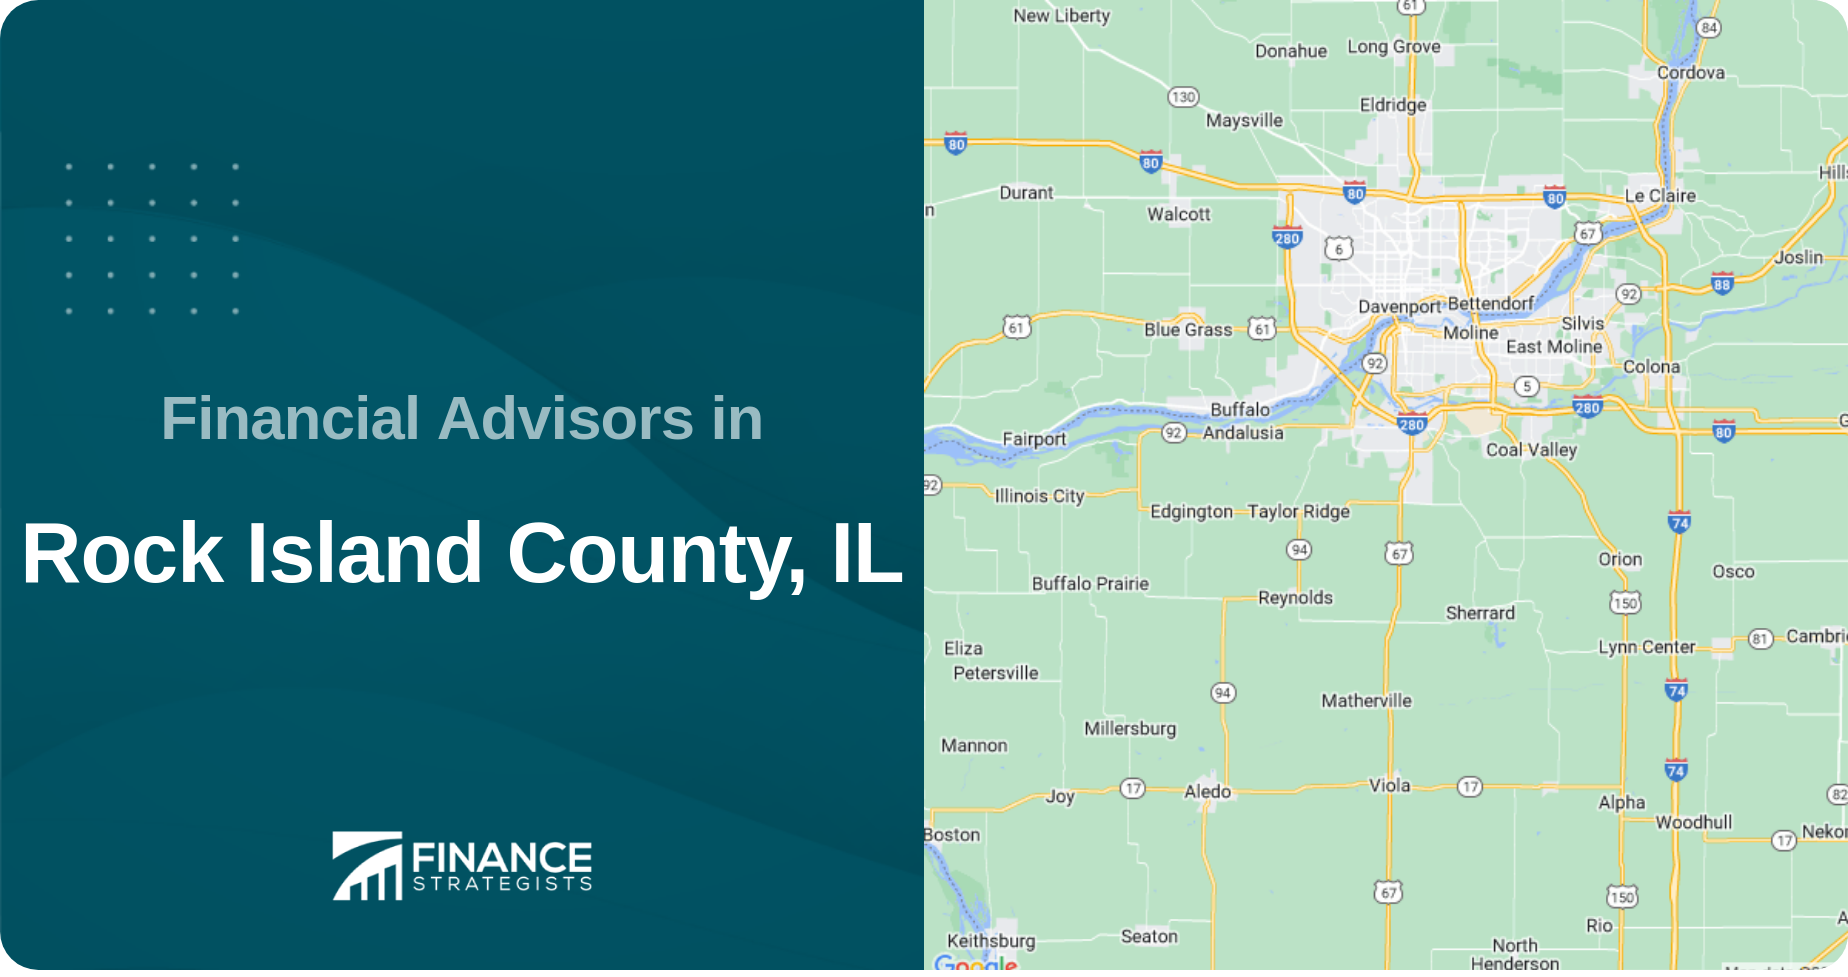 Financial Advisors in Rock Island County, IL